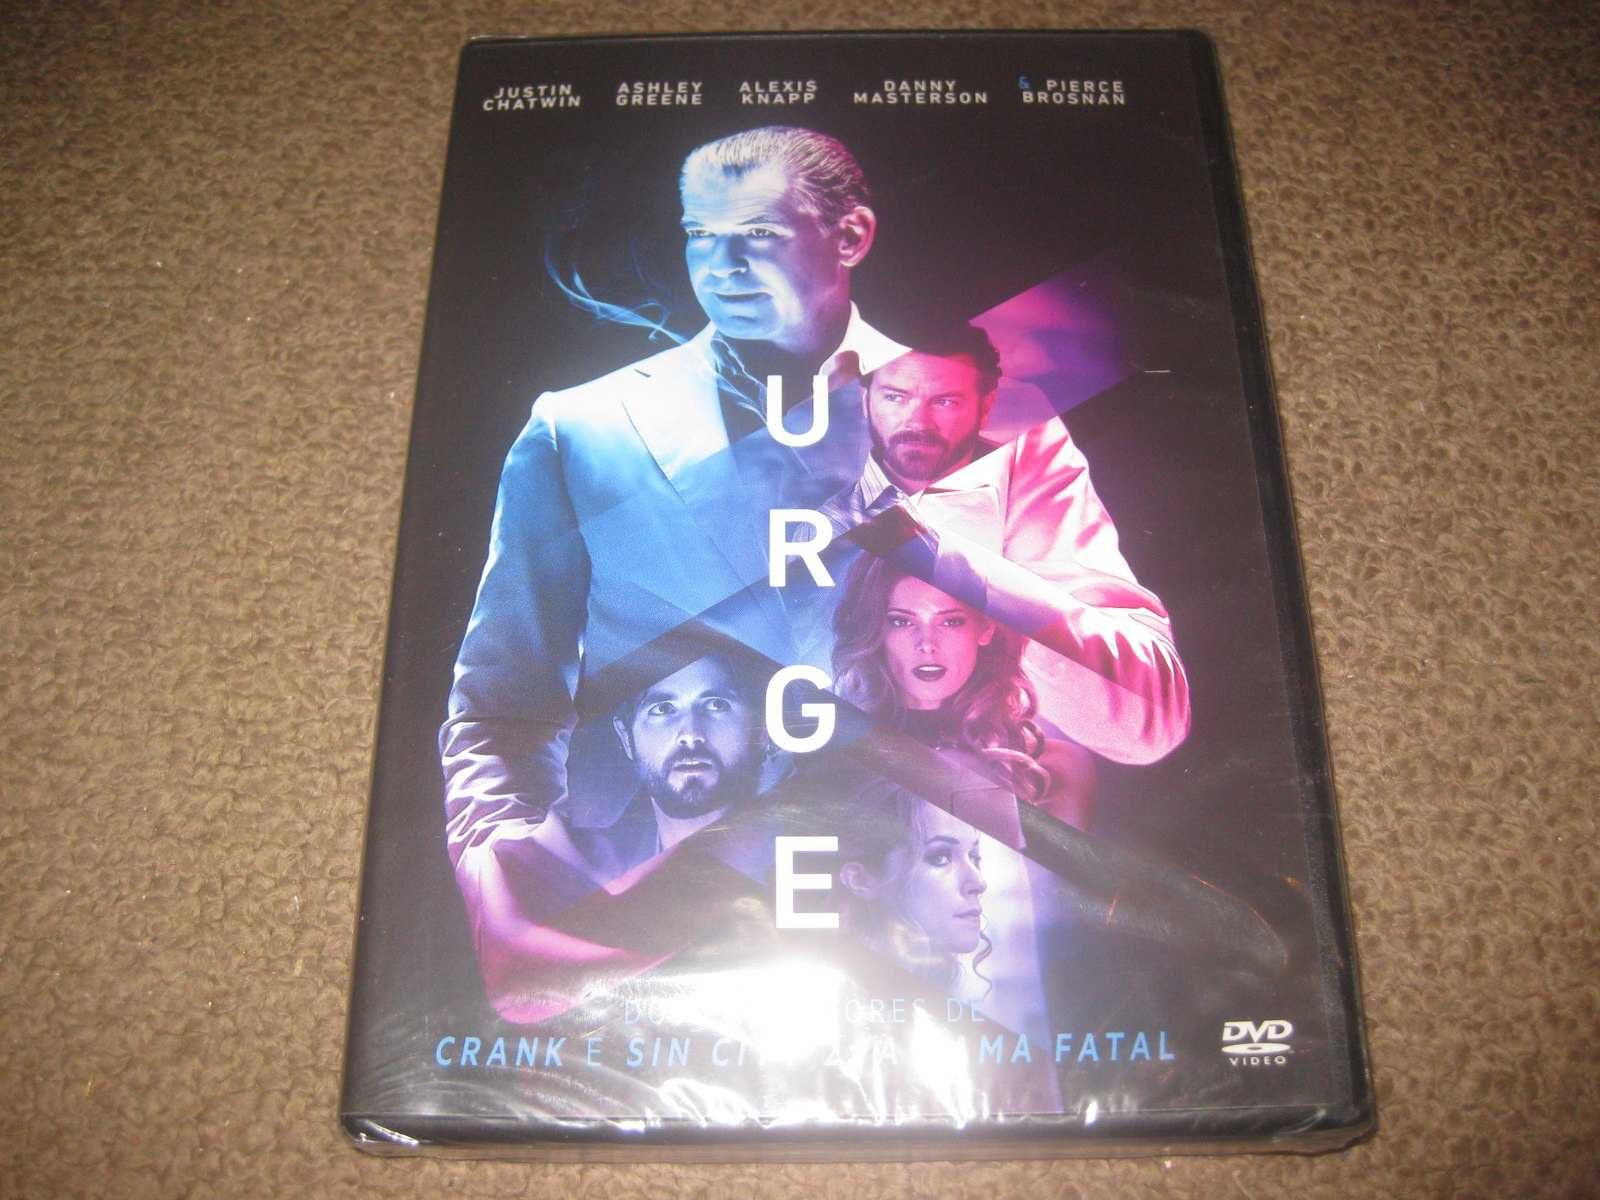 DVD "Urge" com Pierce Brosnan/Selado!